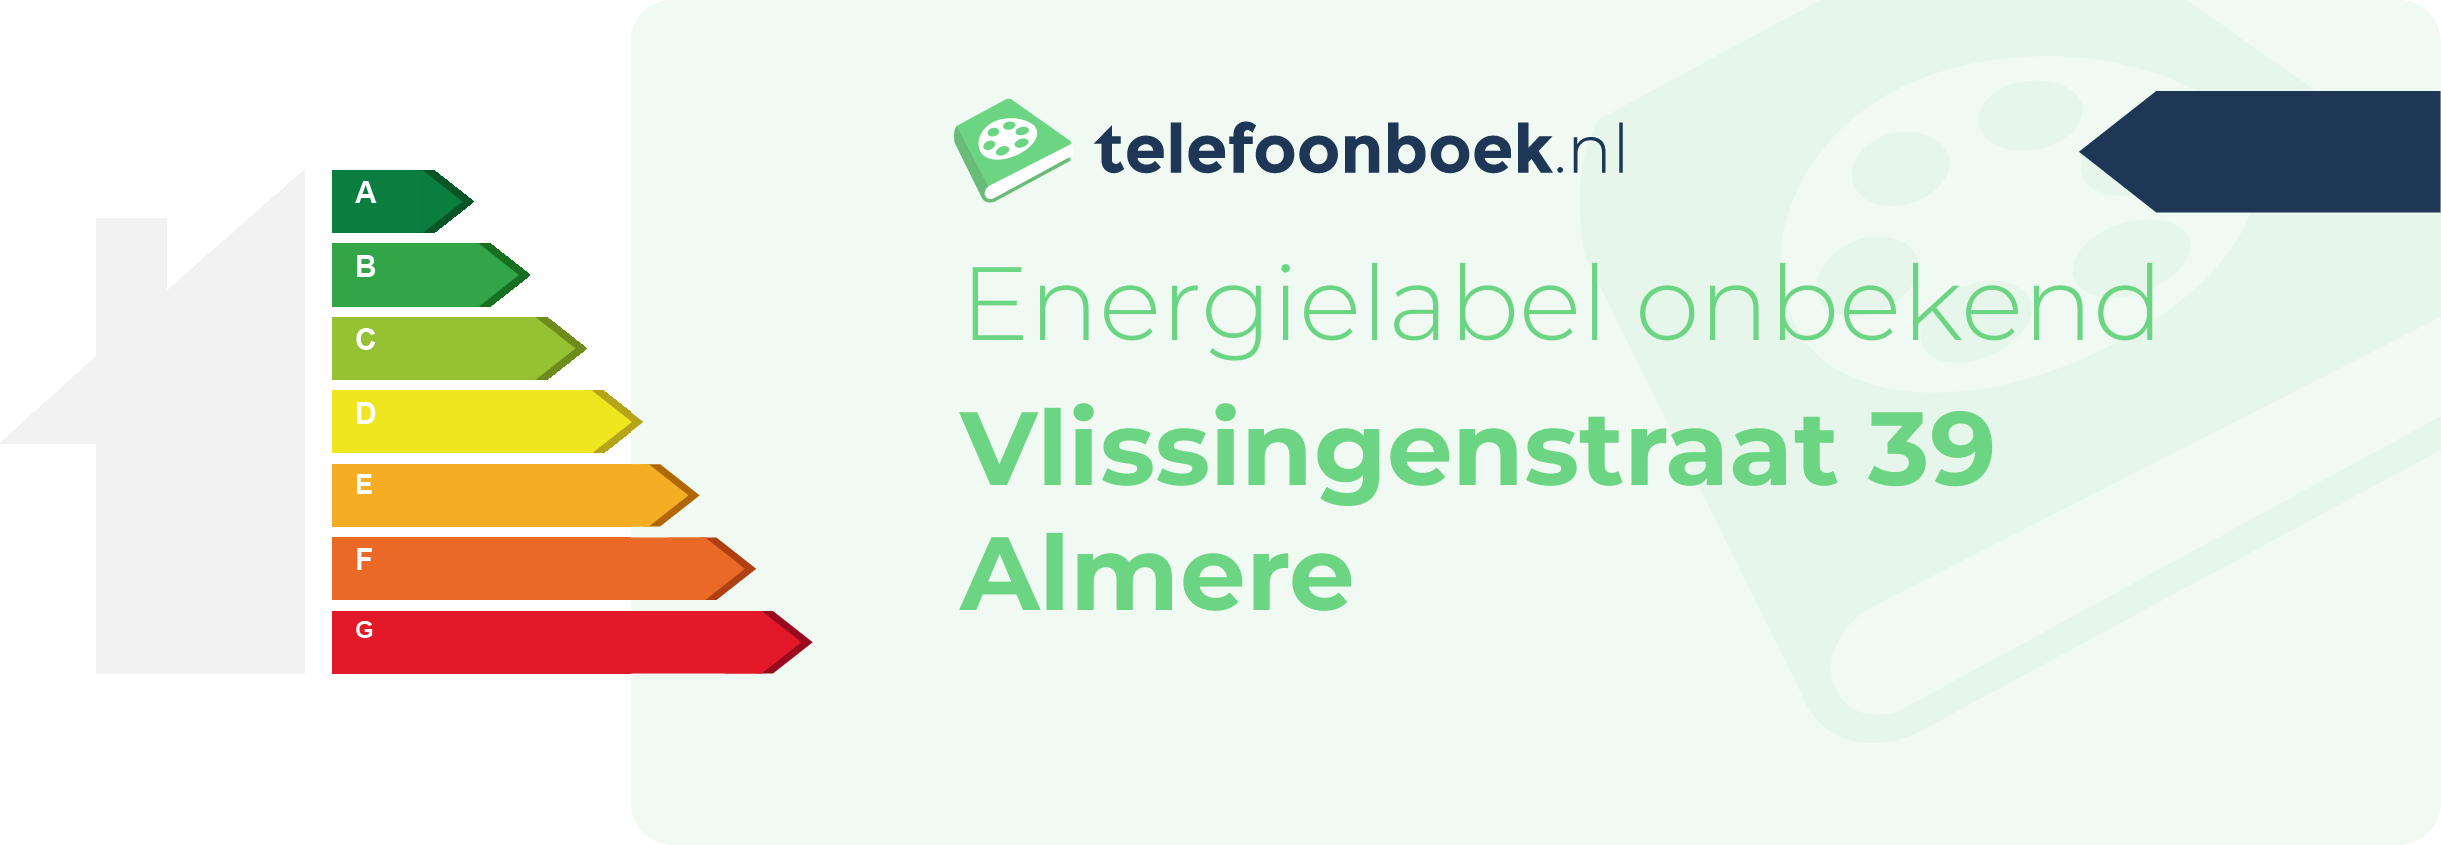 Energielabel Vlissingenstraat 39 Almere